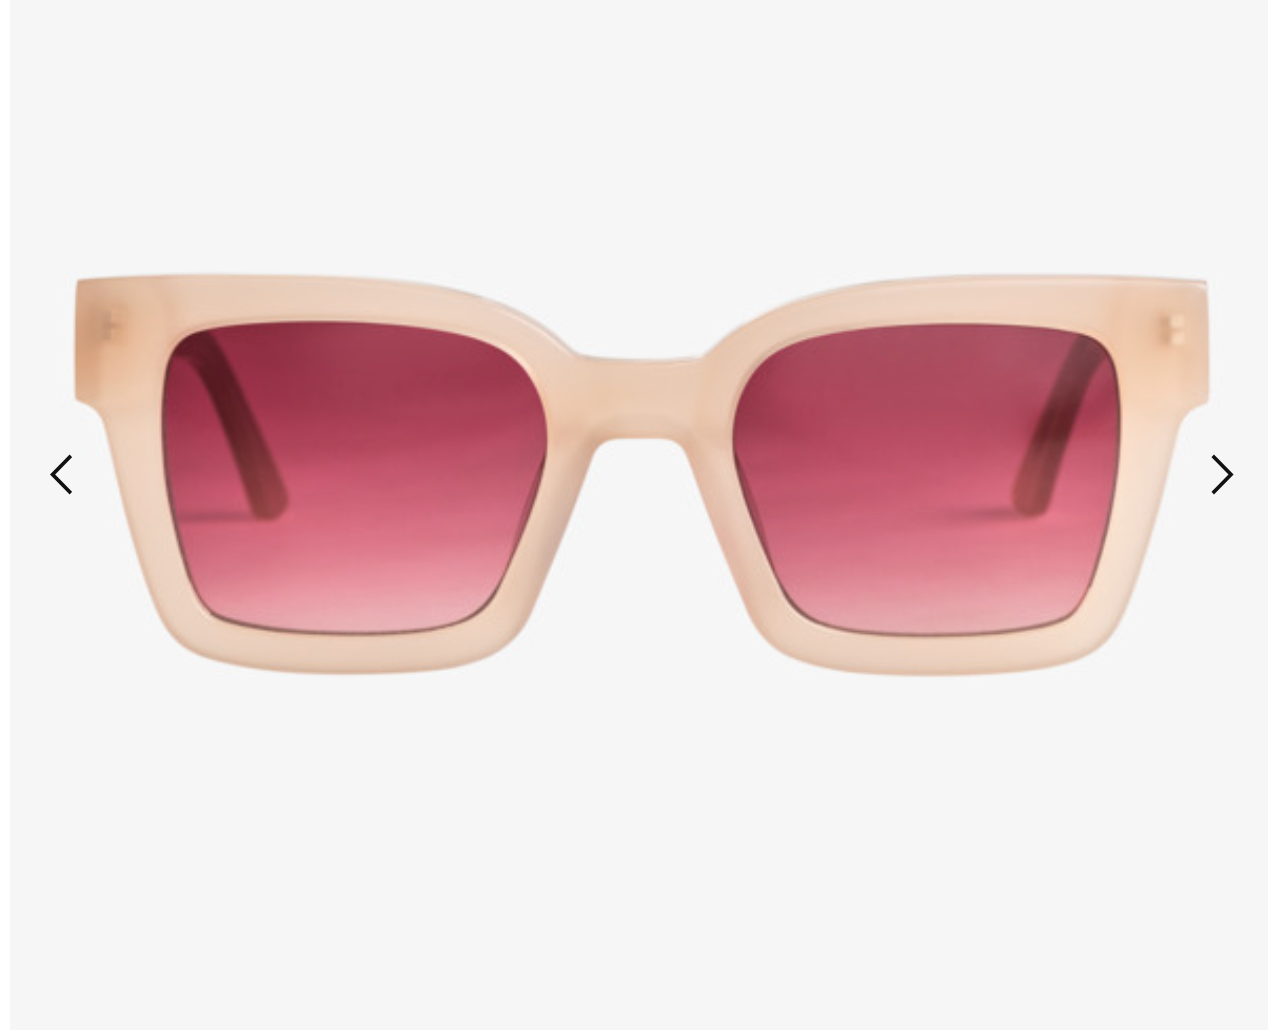 ROXY Nikah - Sunglasses for Women